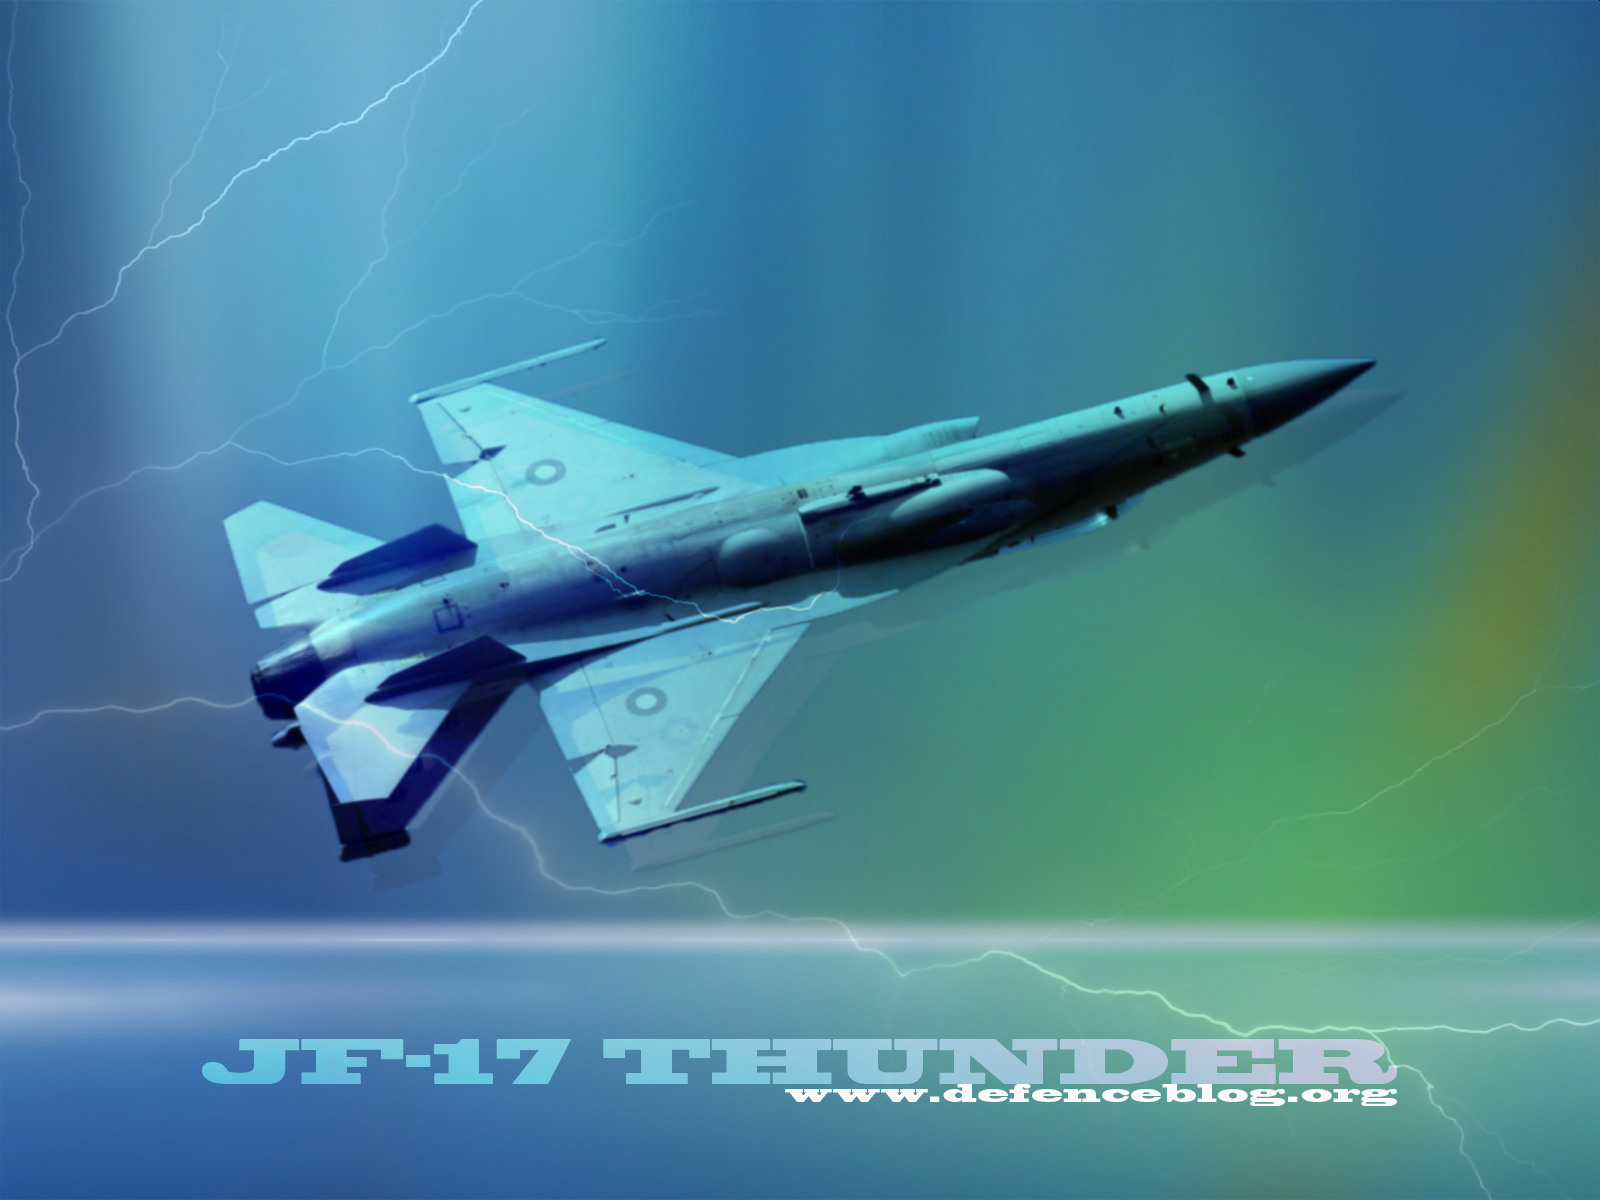  17 thunder hd wallpaper pakistan air force download in hd 1600 x 1200